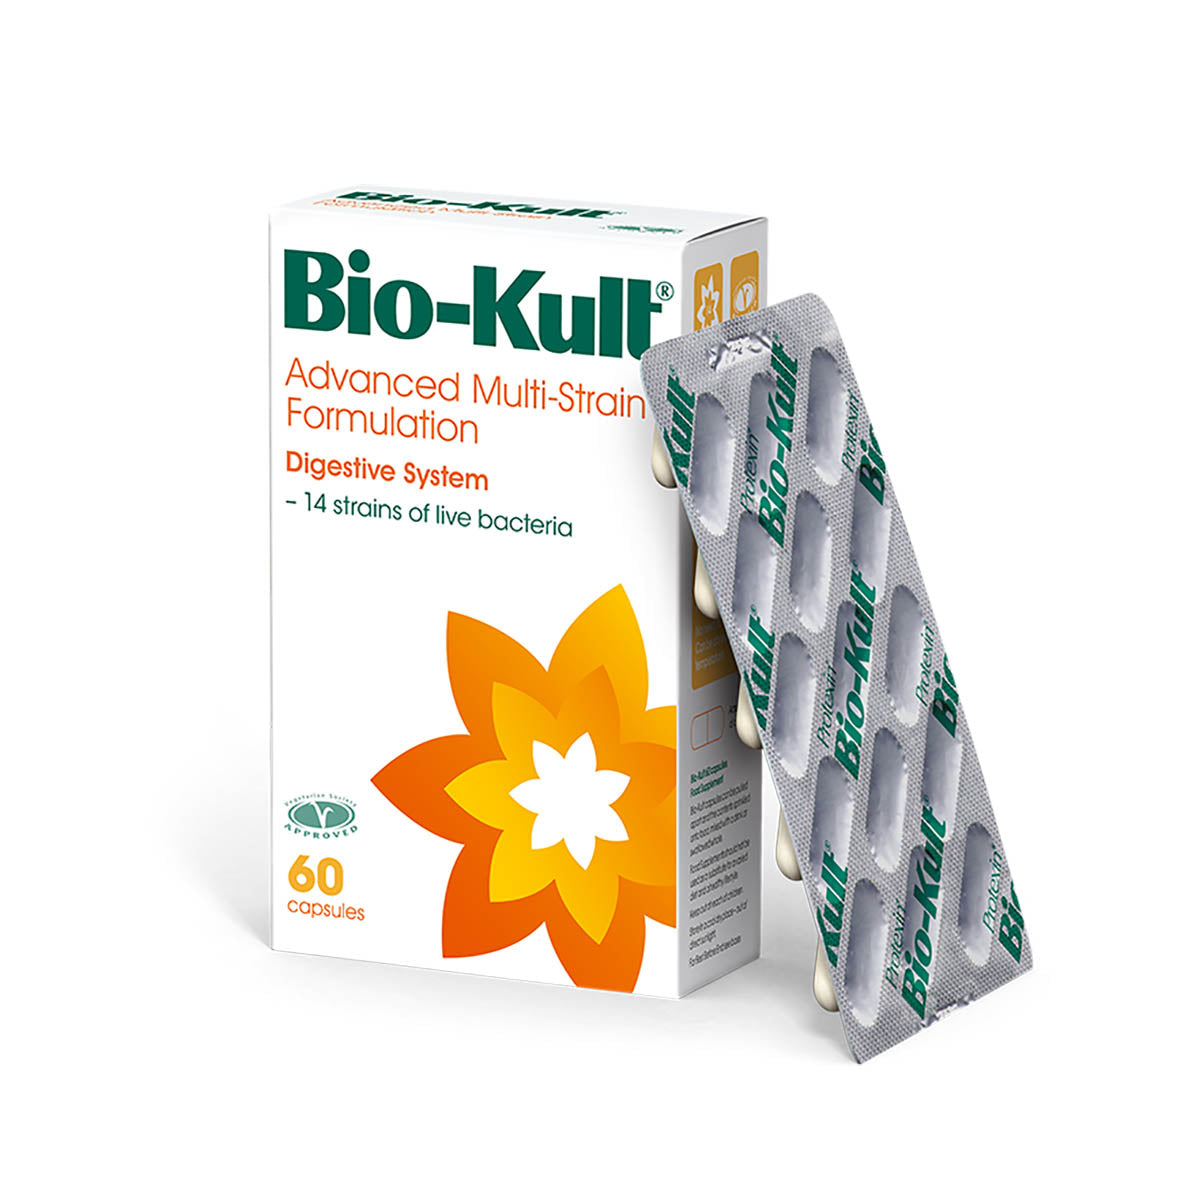 Bio-Kult Advanced Multi-Strain Formulation 60 Capsules